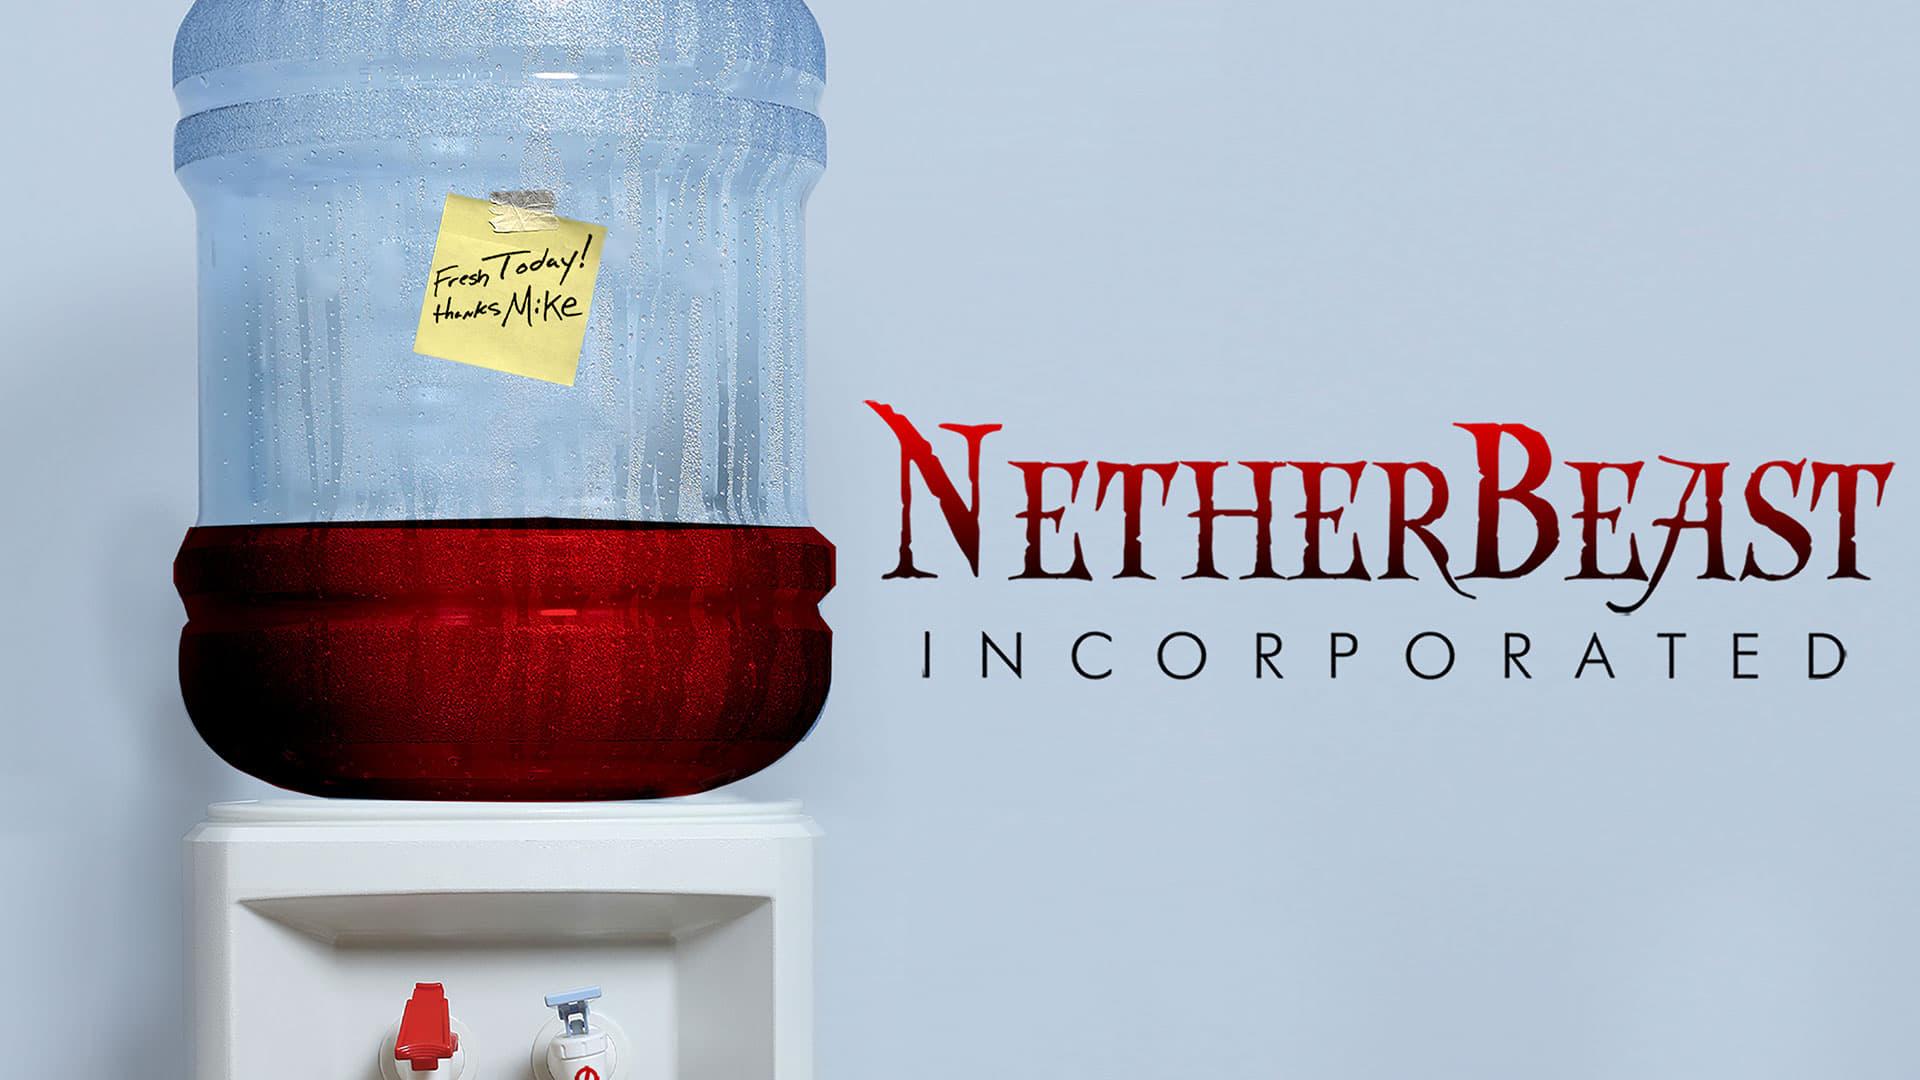 Netherbeast Incorporated backdrop